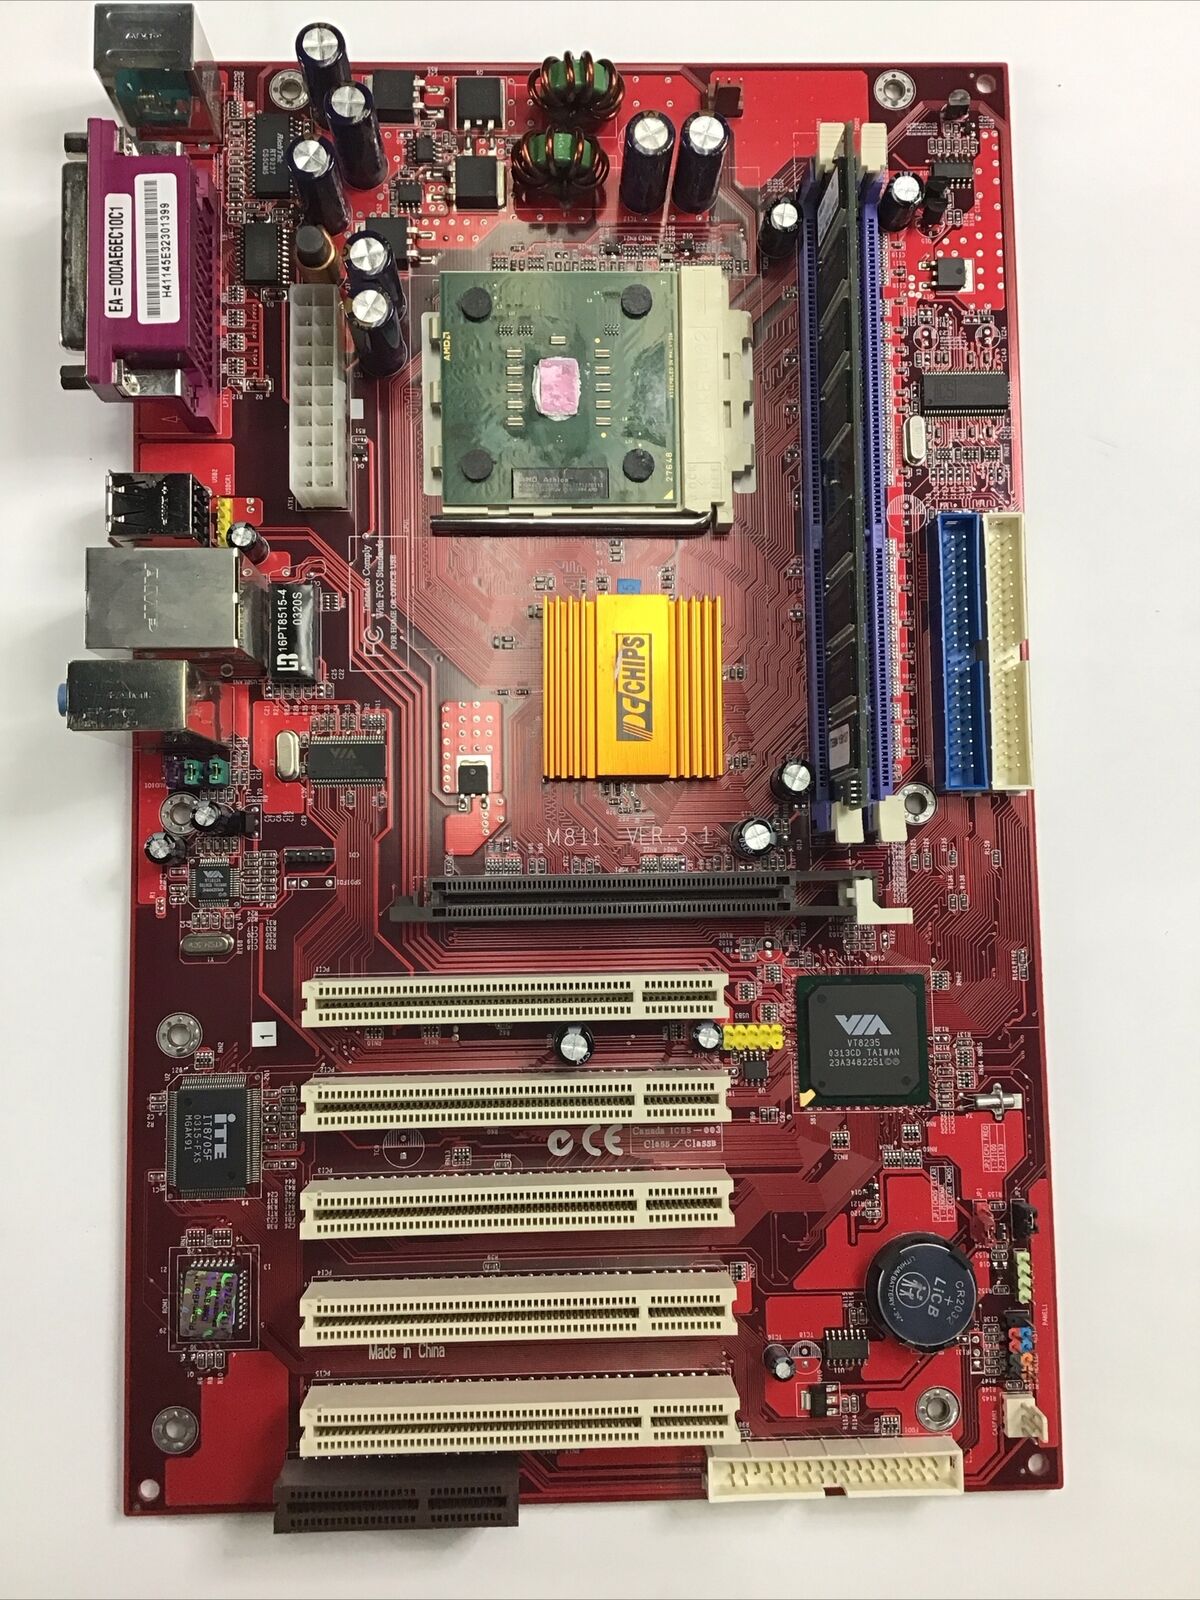 PCCHIPS M811 VER:3.1 Motherboard Socket A 1GB DDR ATX AMD